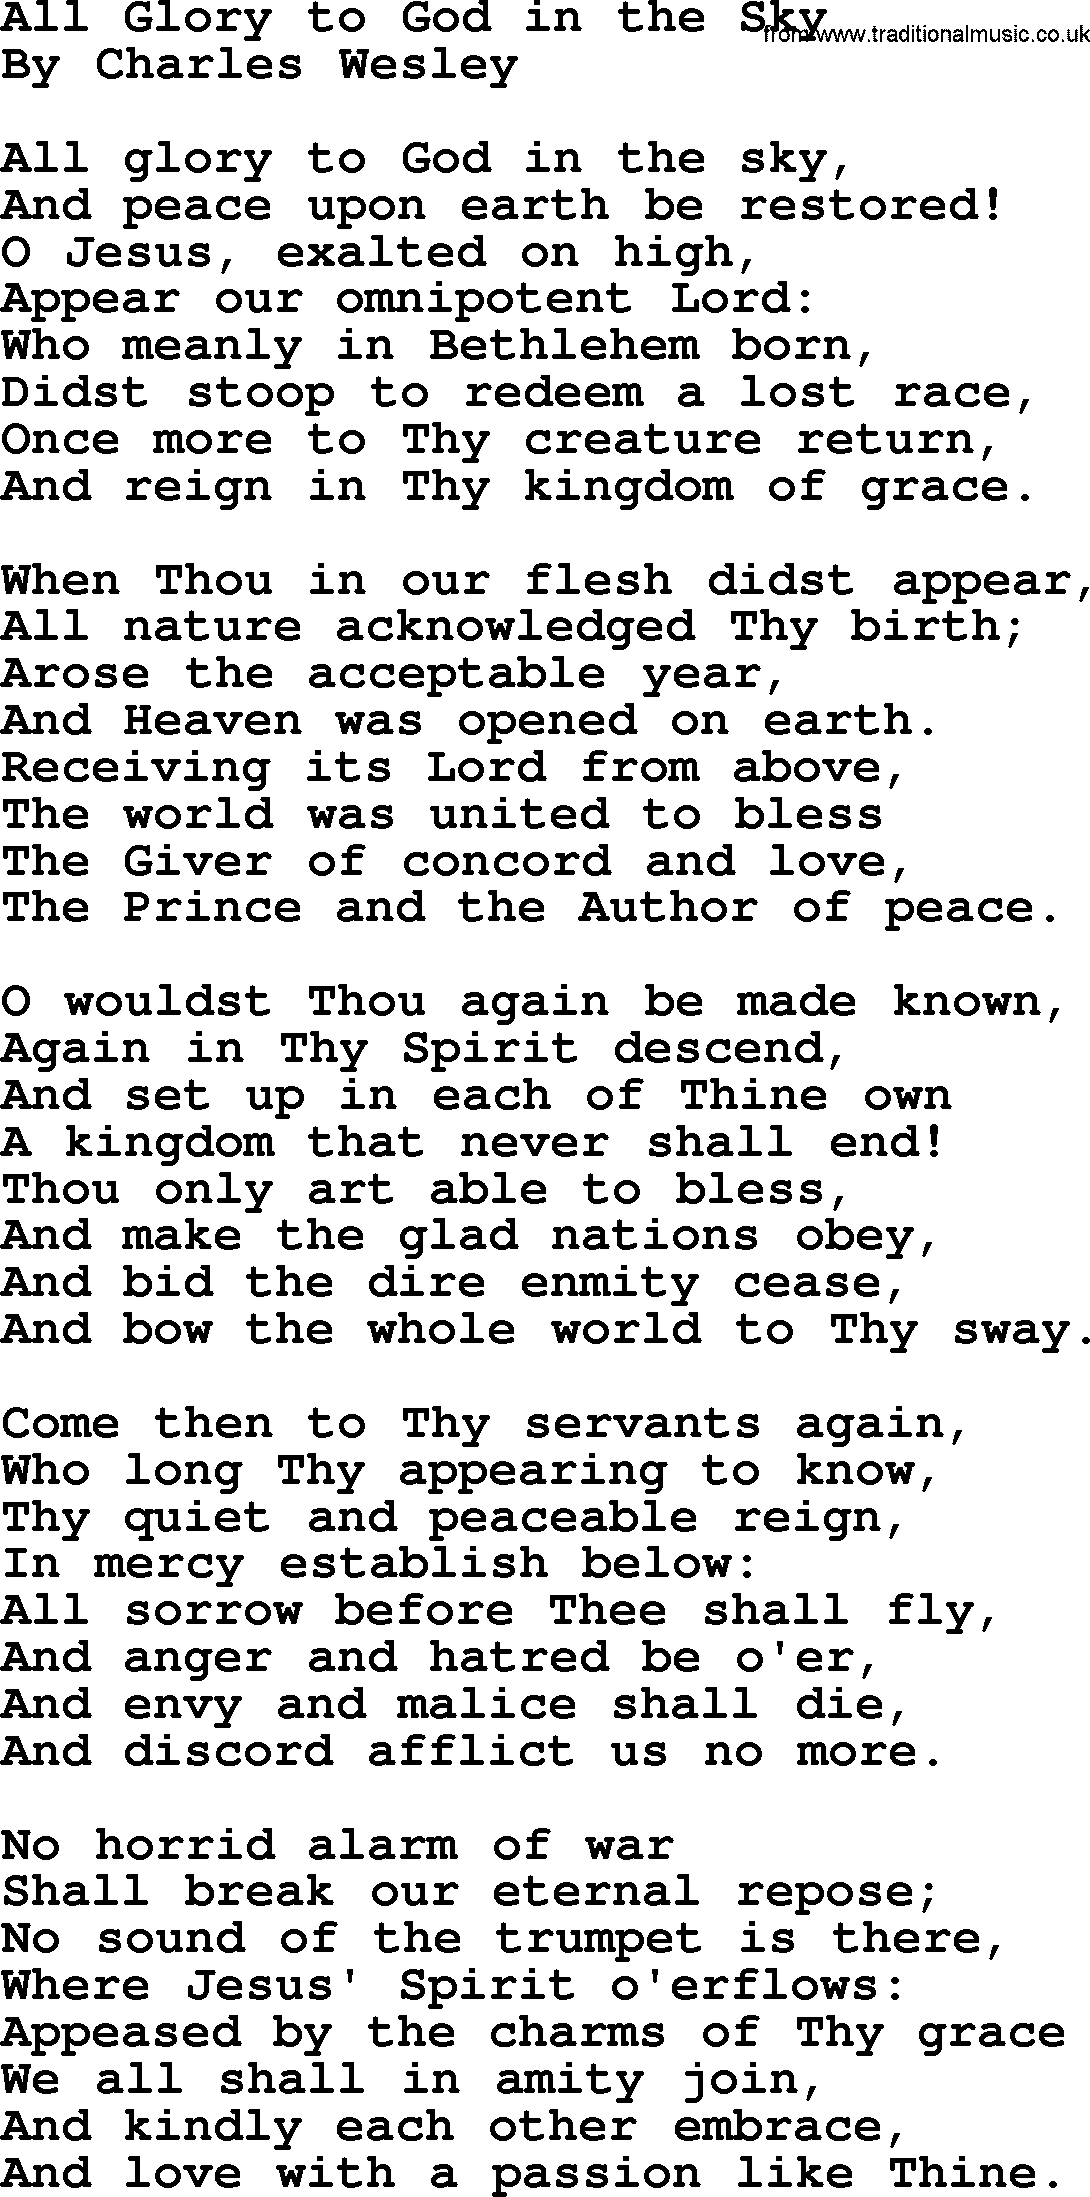 Charles Wesley hymn: All Glory To God In The Sky, lyrics